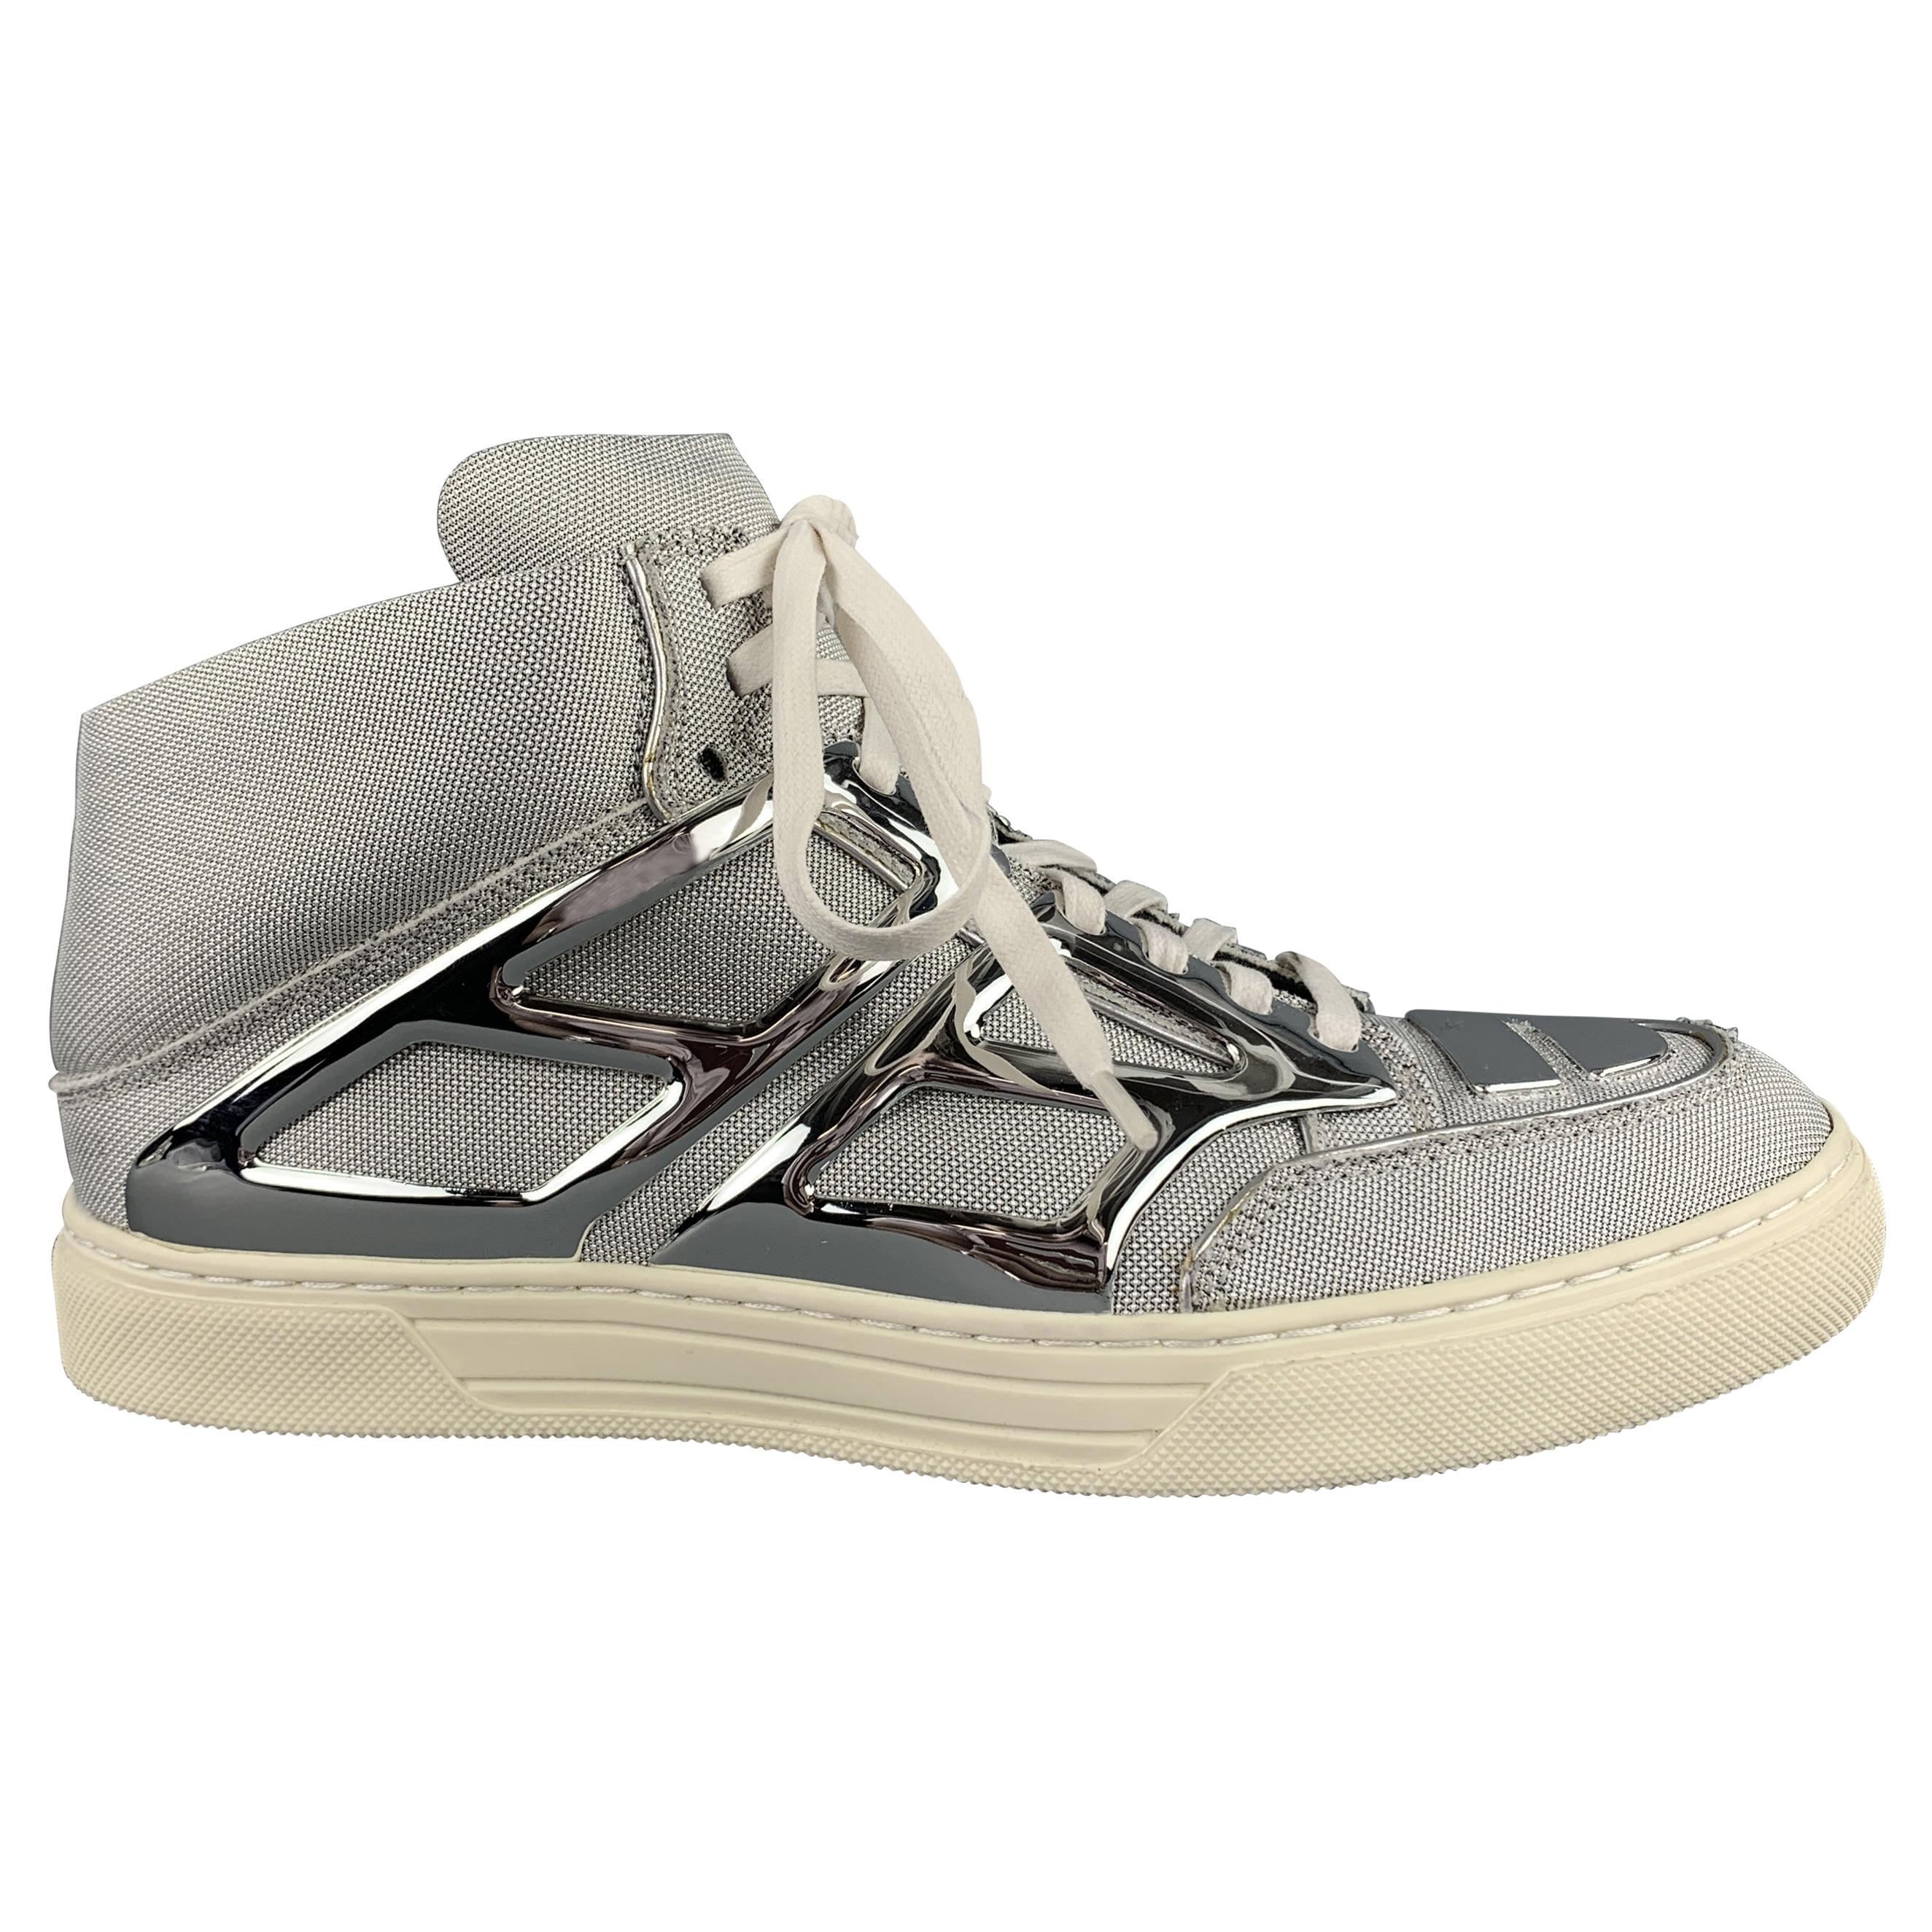 ALEJANDRO INGELMO TRON Size 8 Silver Metallic Canvas High Top Sneakers